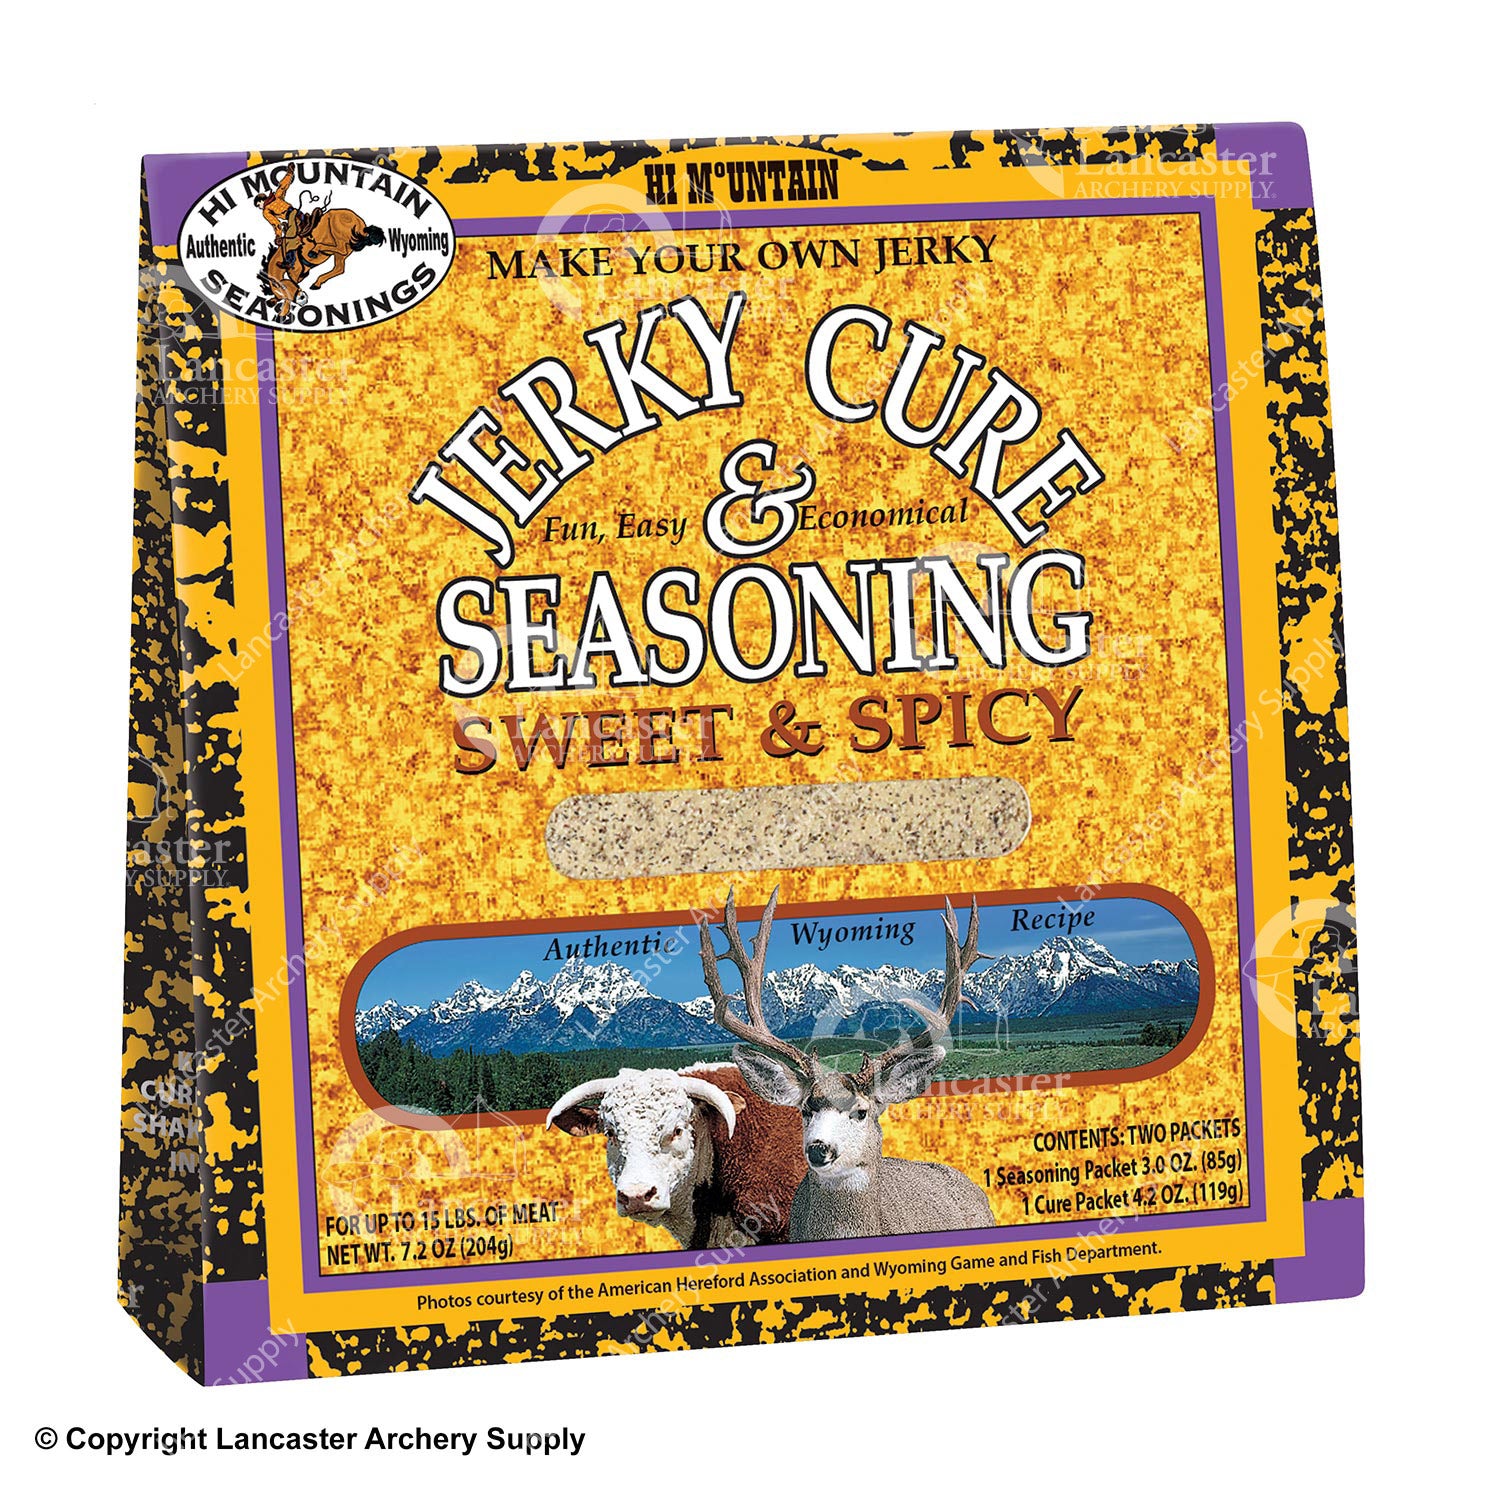 Hi Mountain Jerky Cure & Seasoning Kit